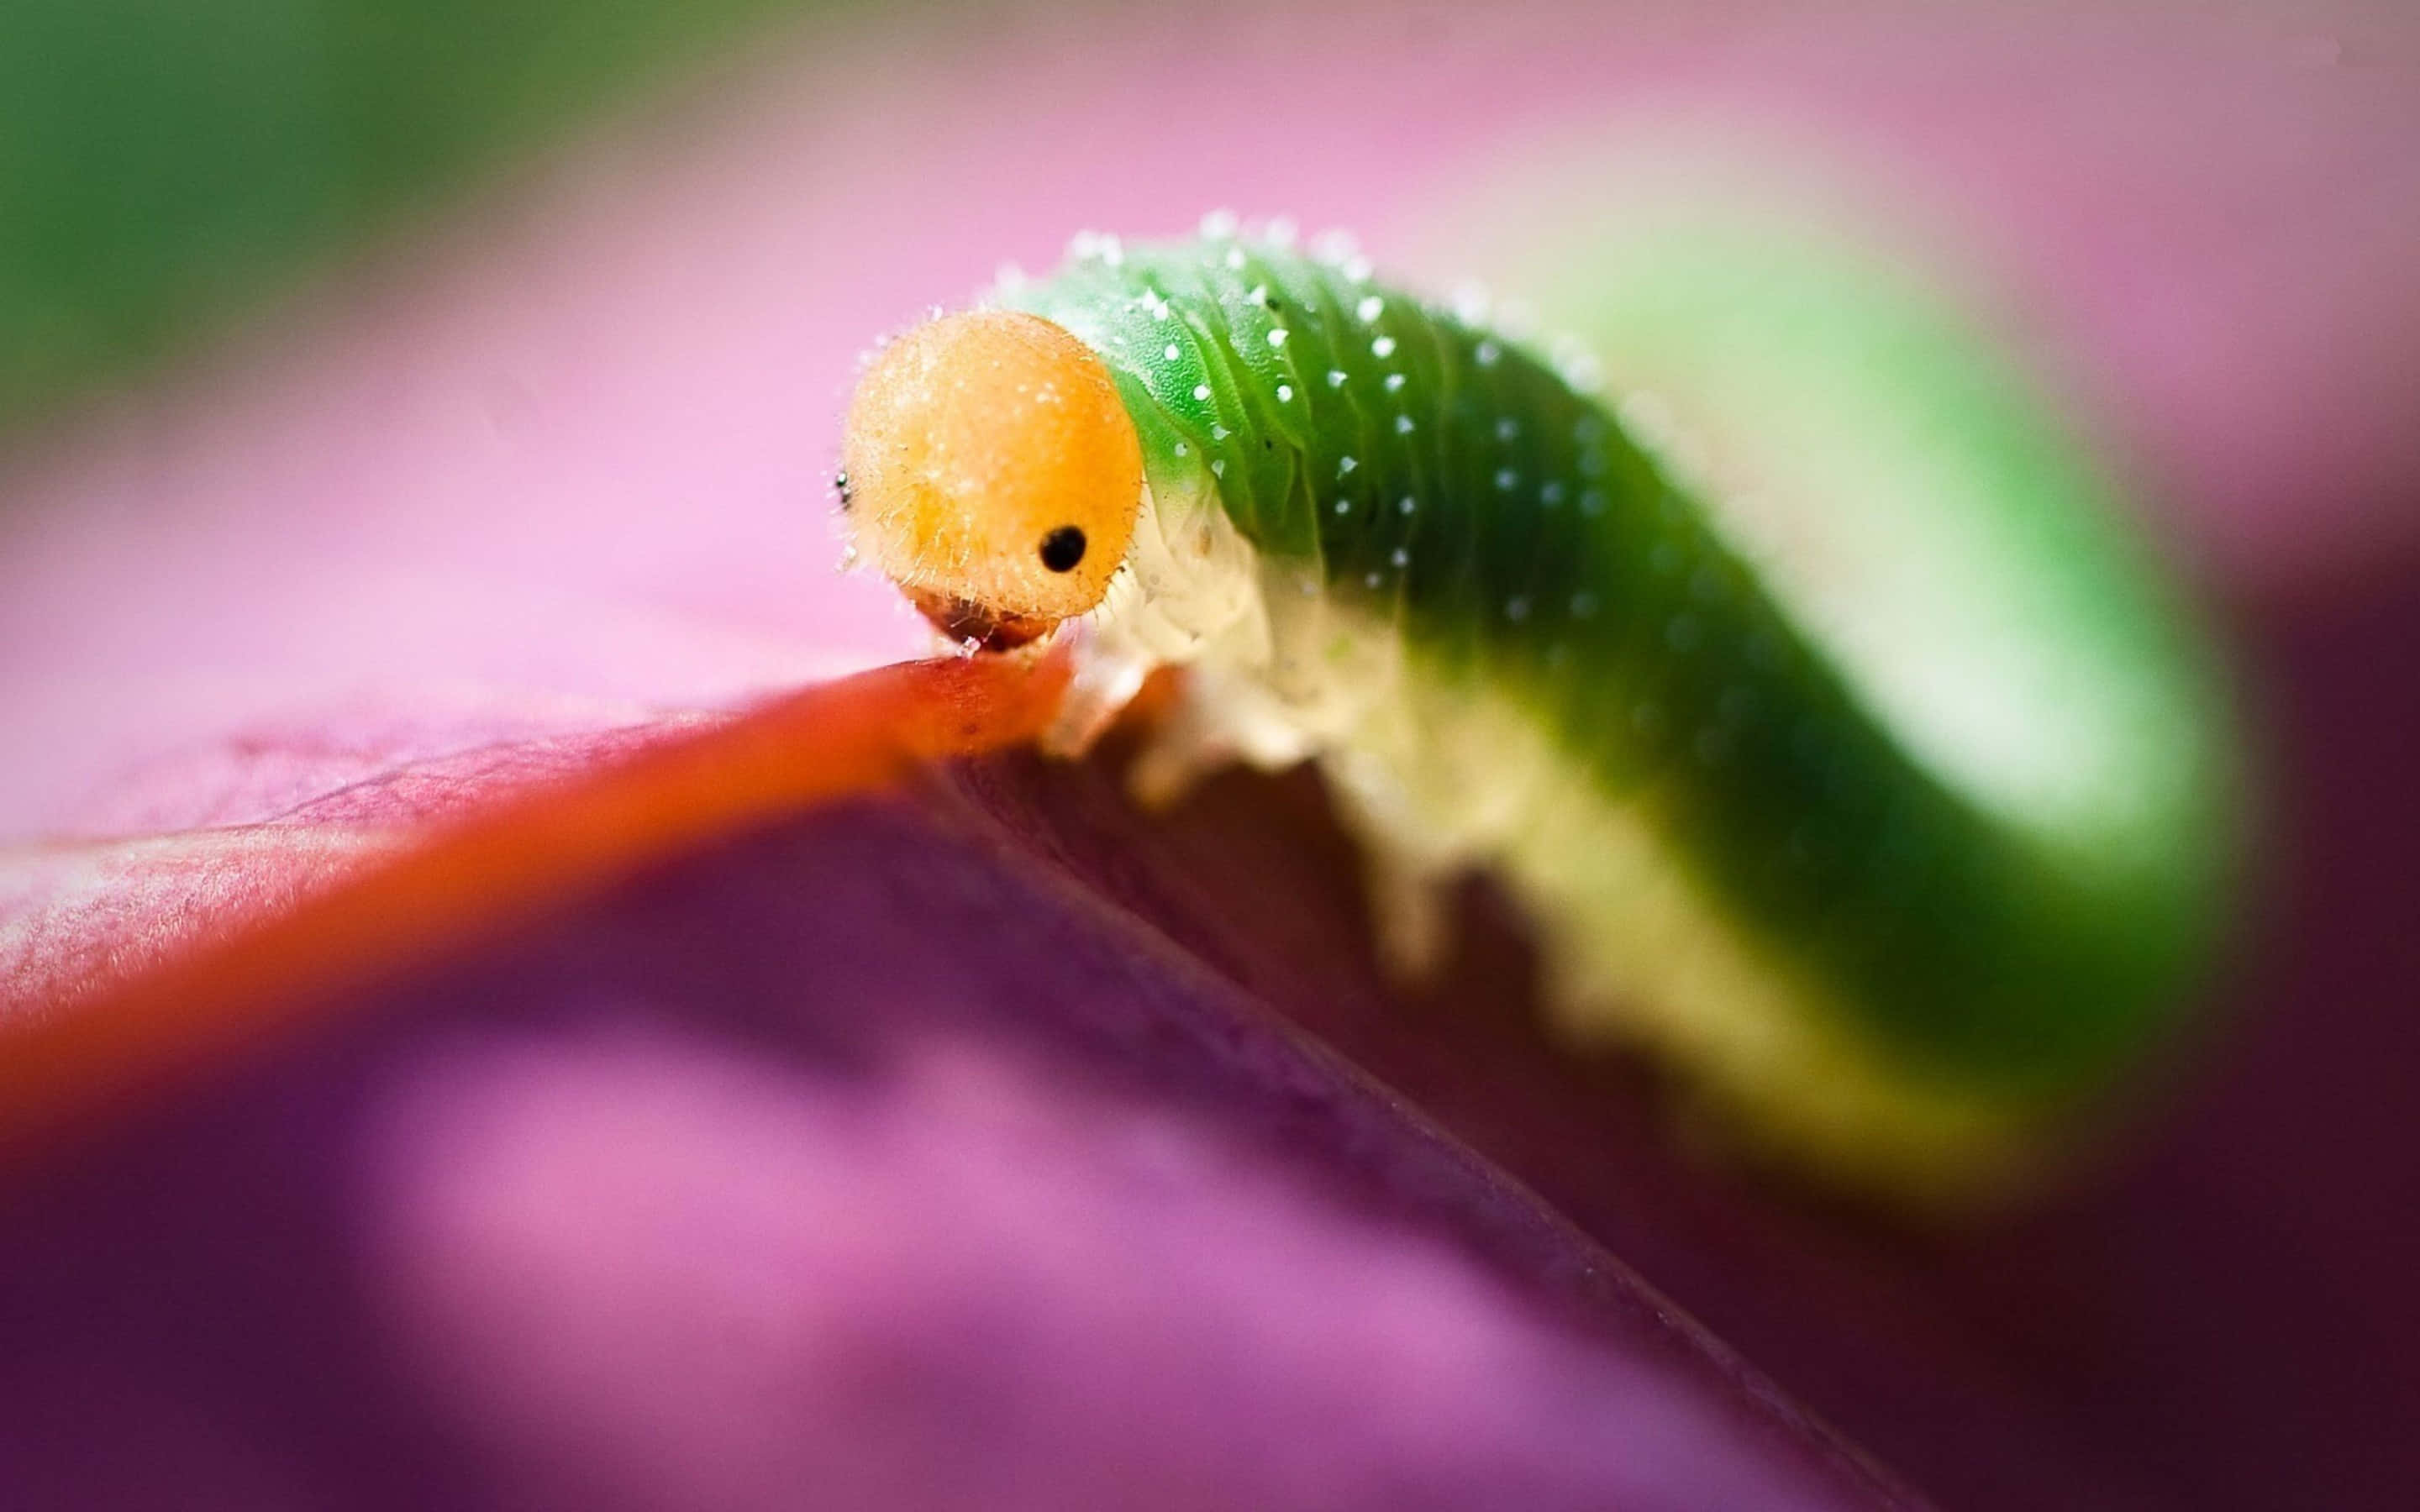 Witness the Metamorphosis of the Caterpillar Wallpaper